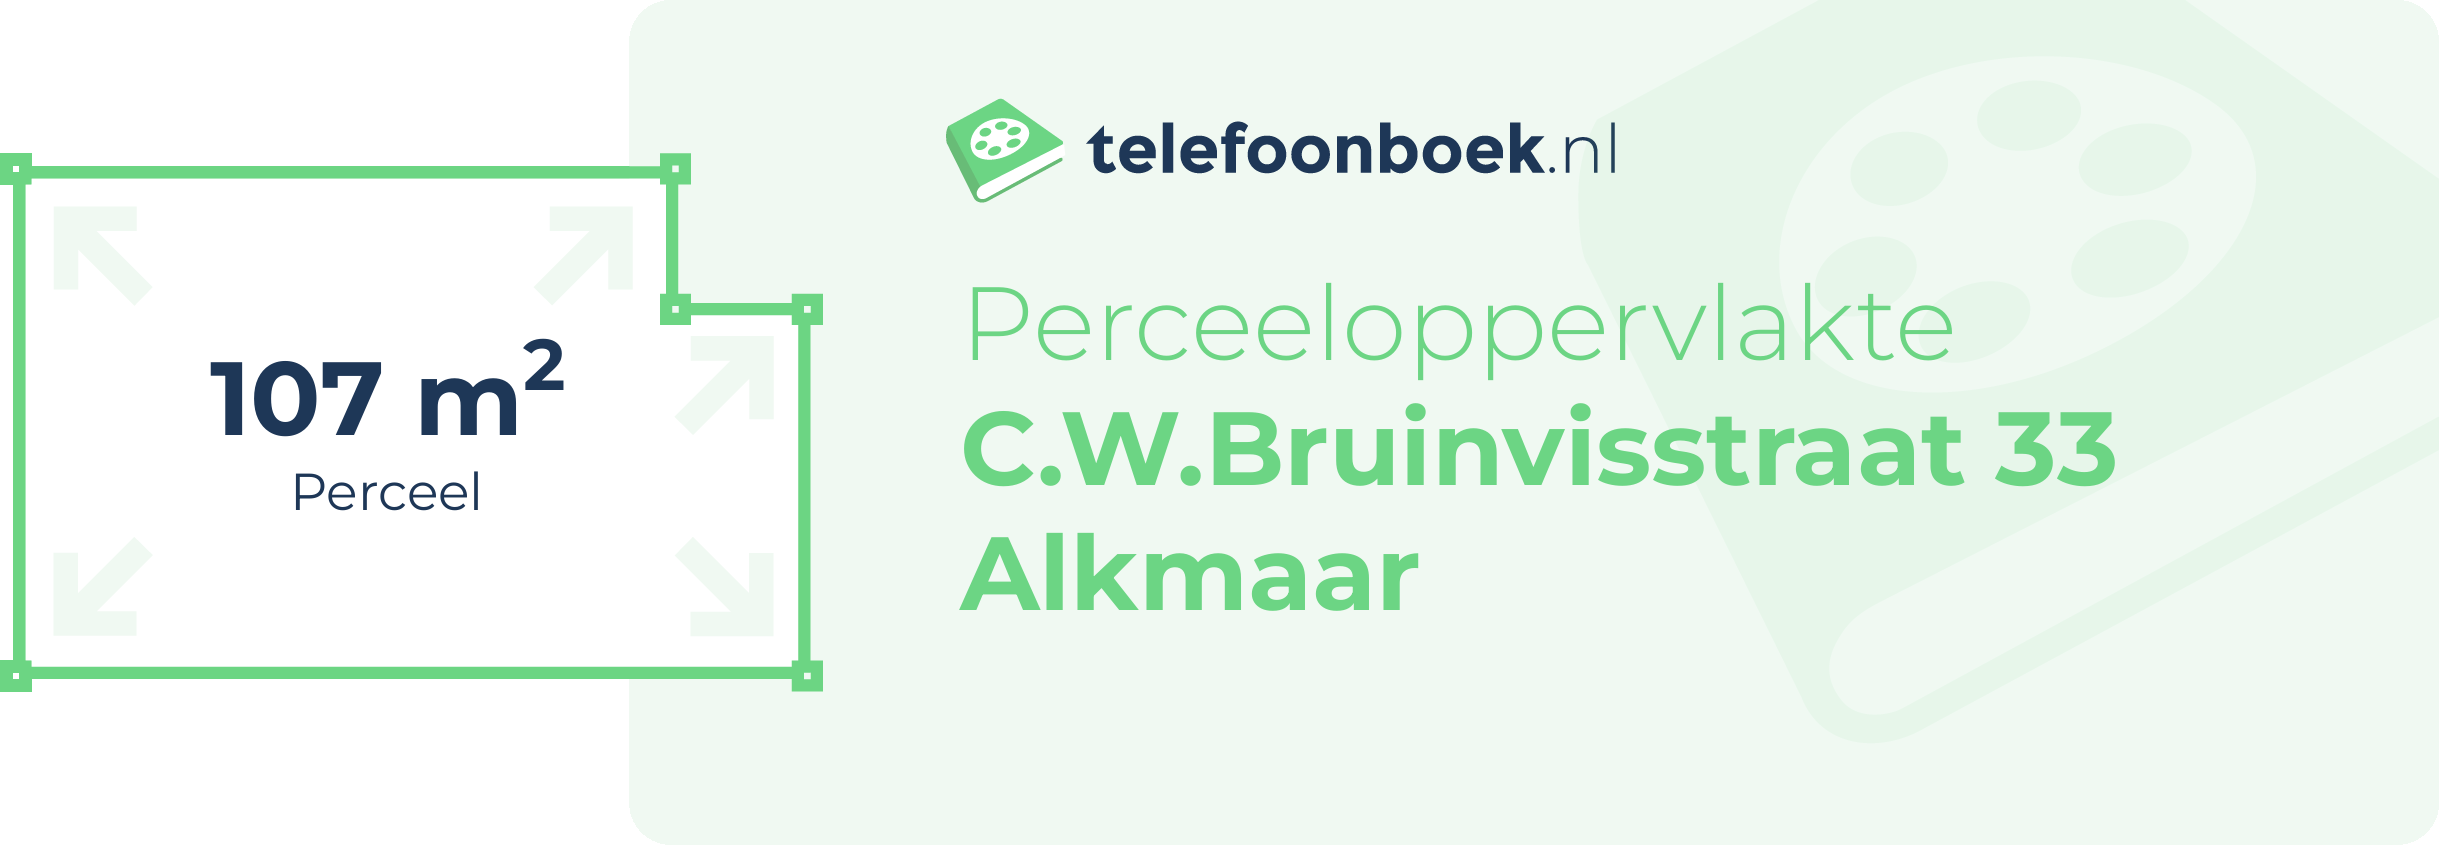 Perceeloppervlakte C.W.Bruinvisstraat 33 Alkmaar